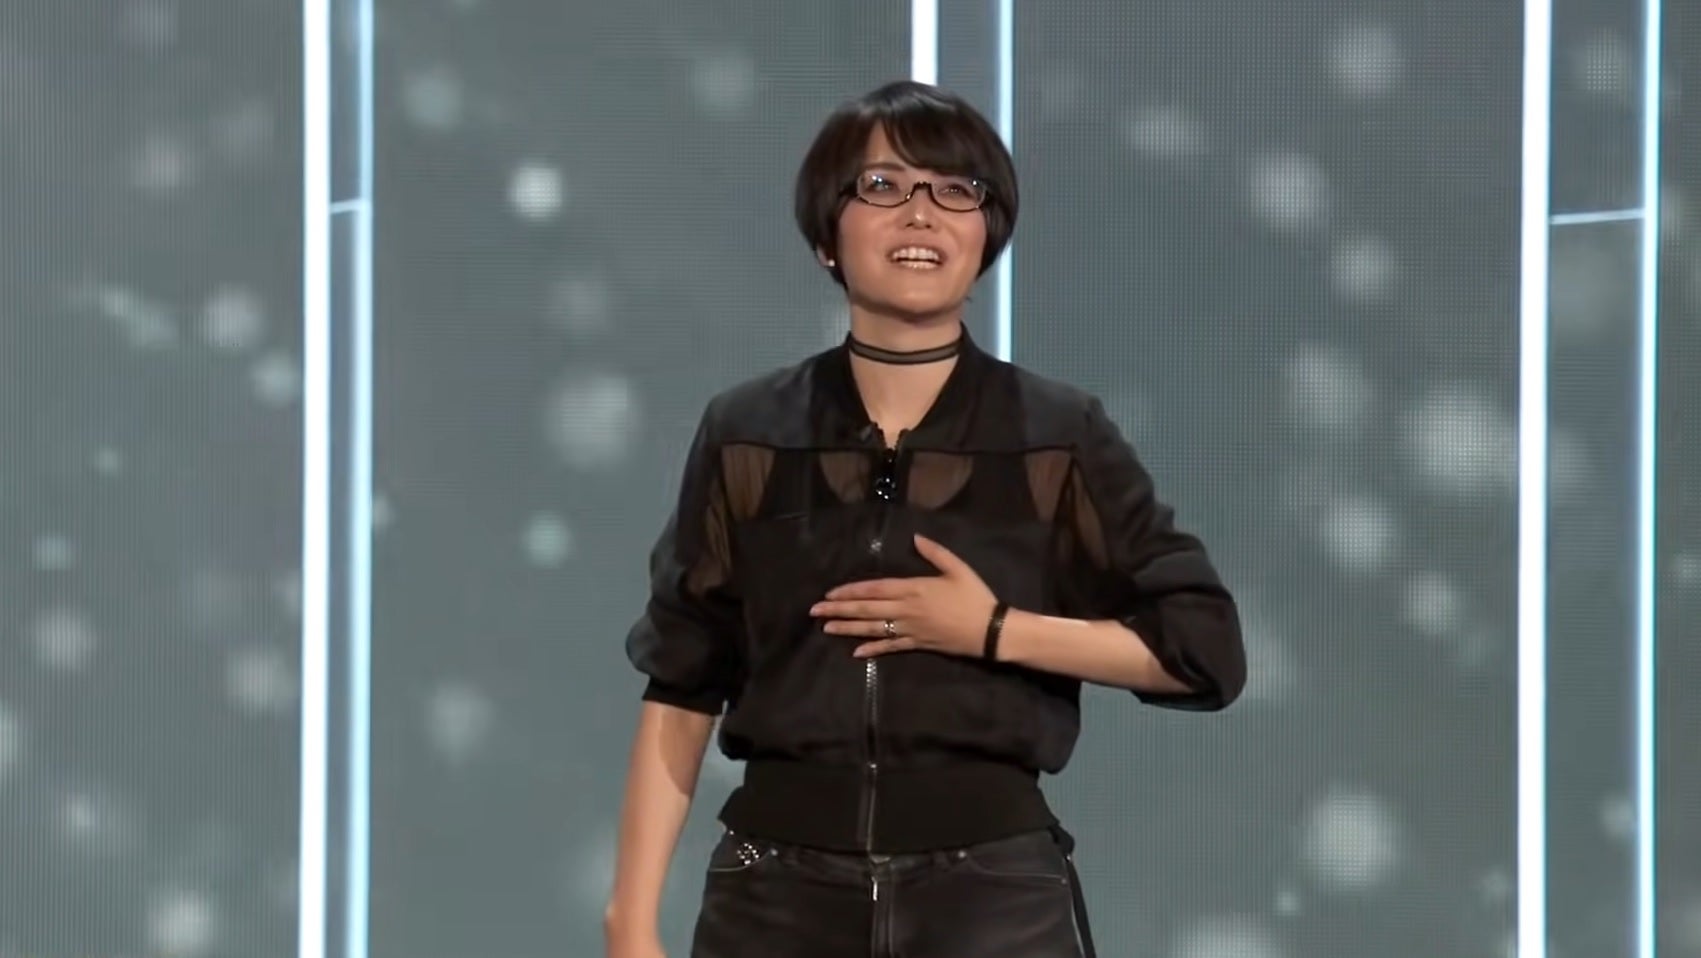 Ikumi Nakamura presenting Ghostwire: Tokyo during Bethesda's show at E3 2019.